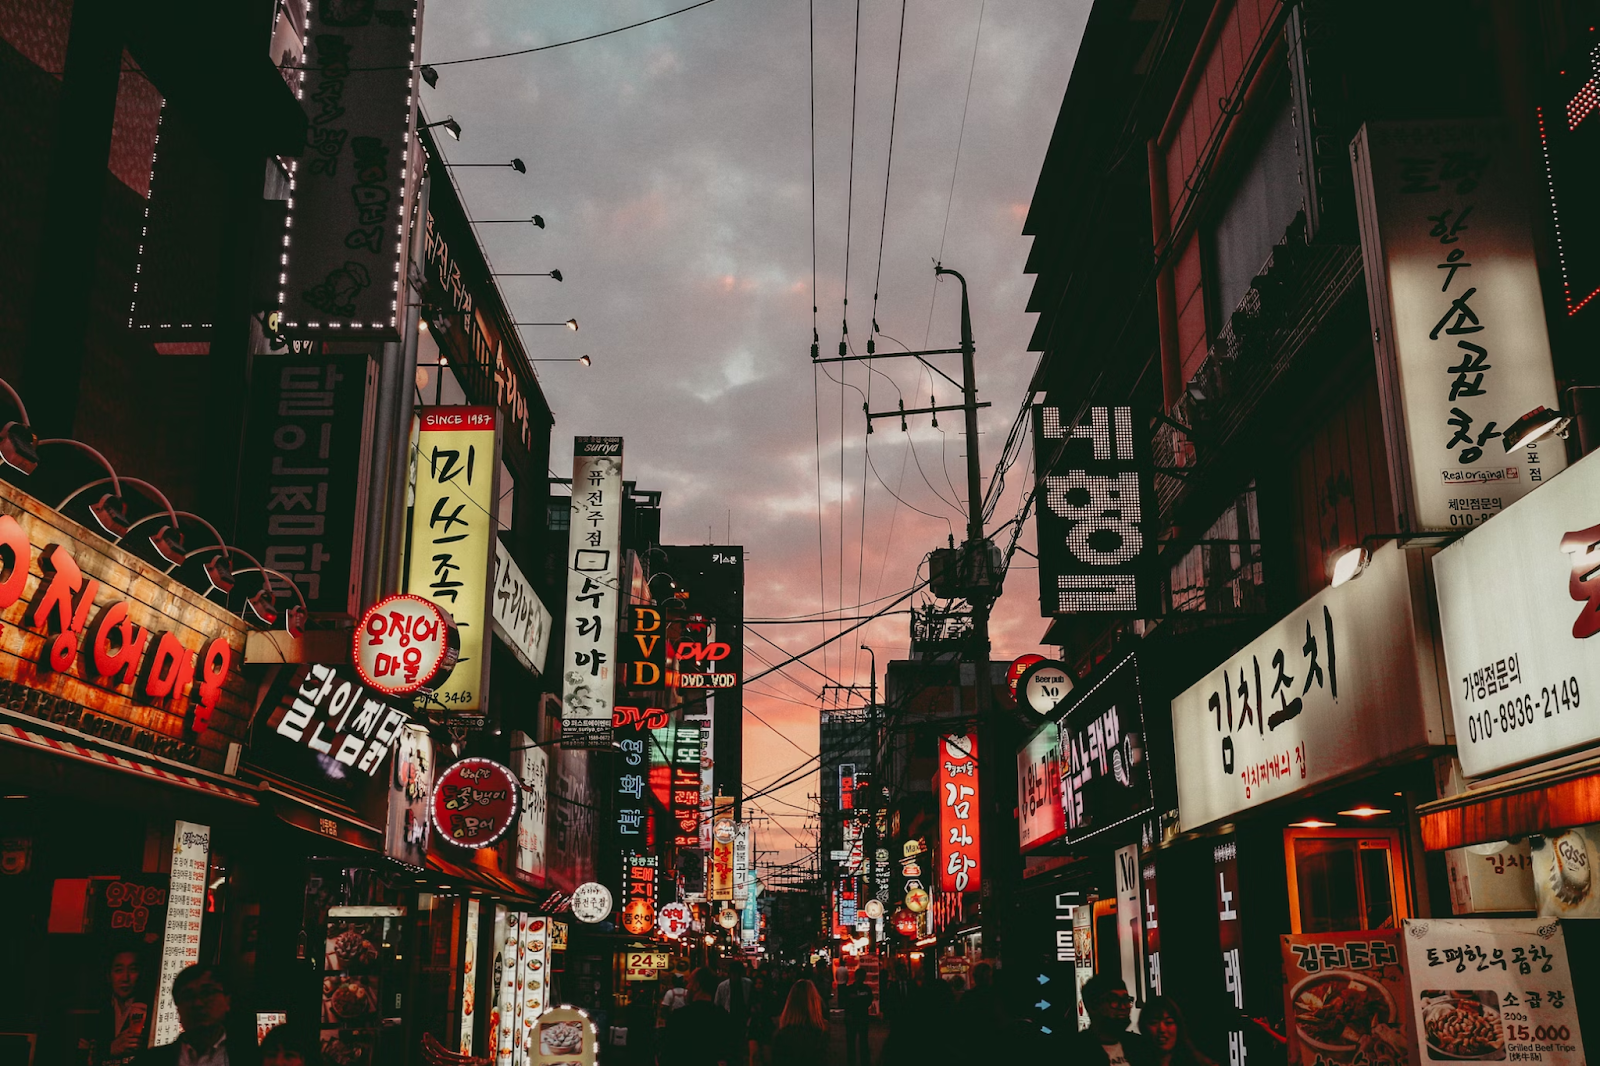 Korean city night life